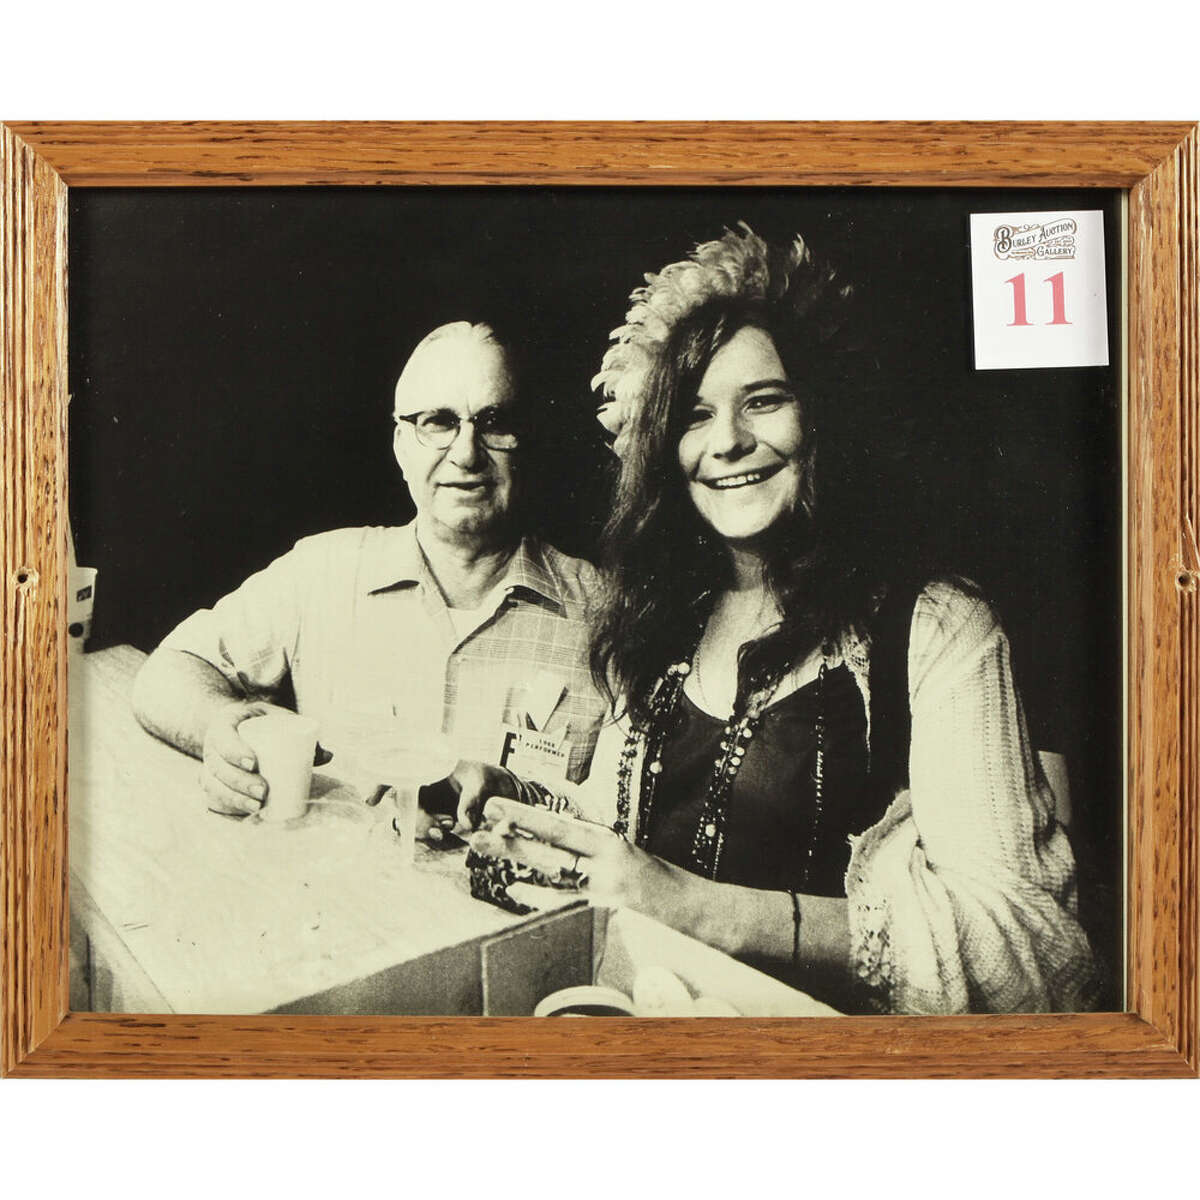 Janis Joplin & Kenneth Threadgill Photograph.